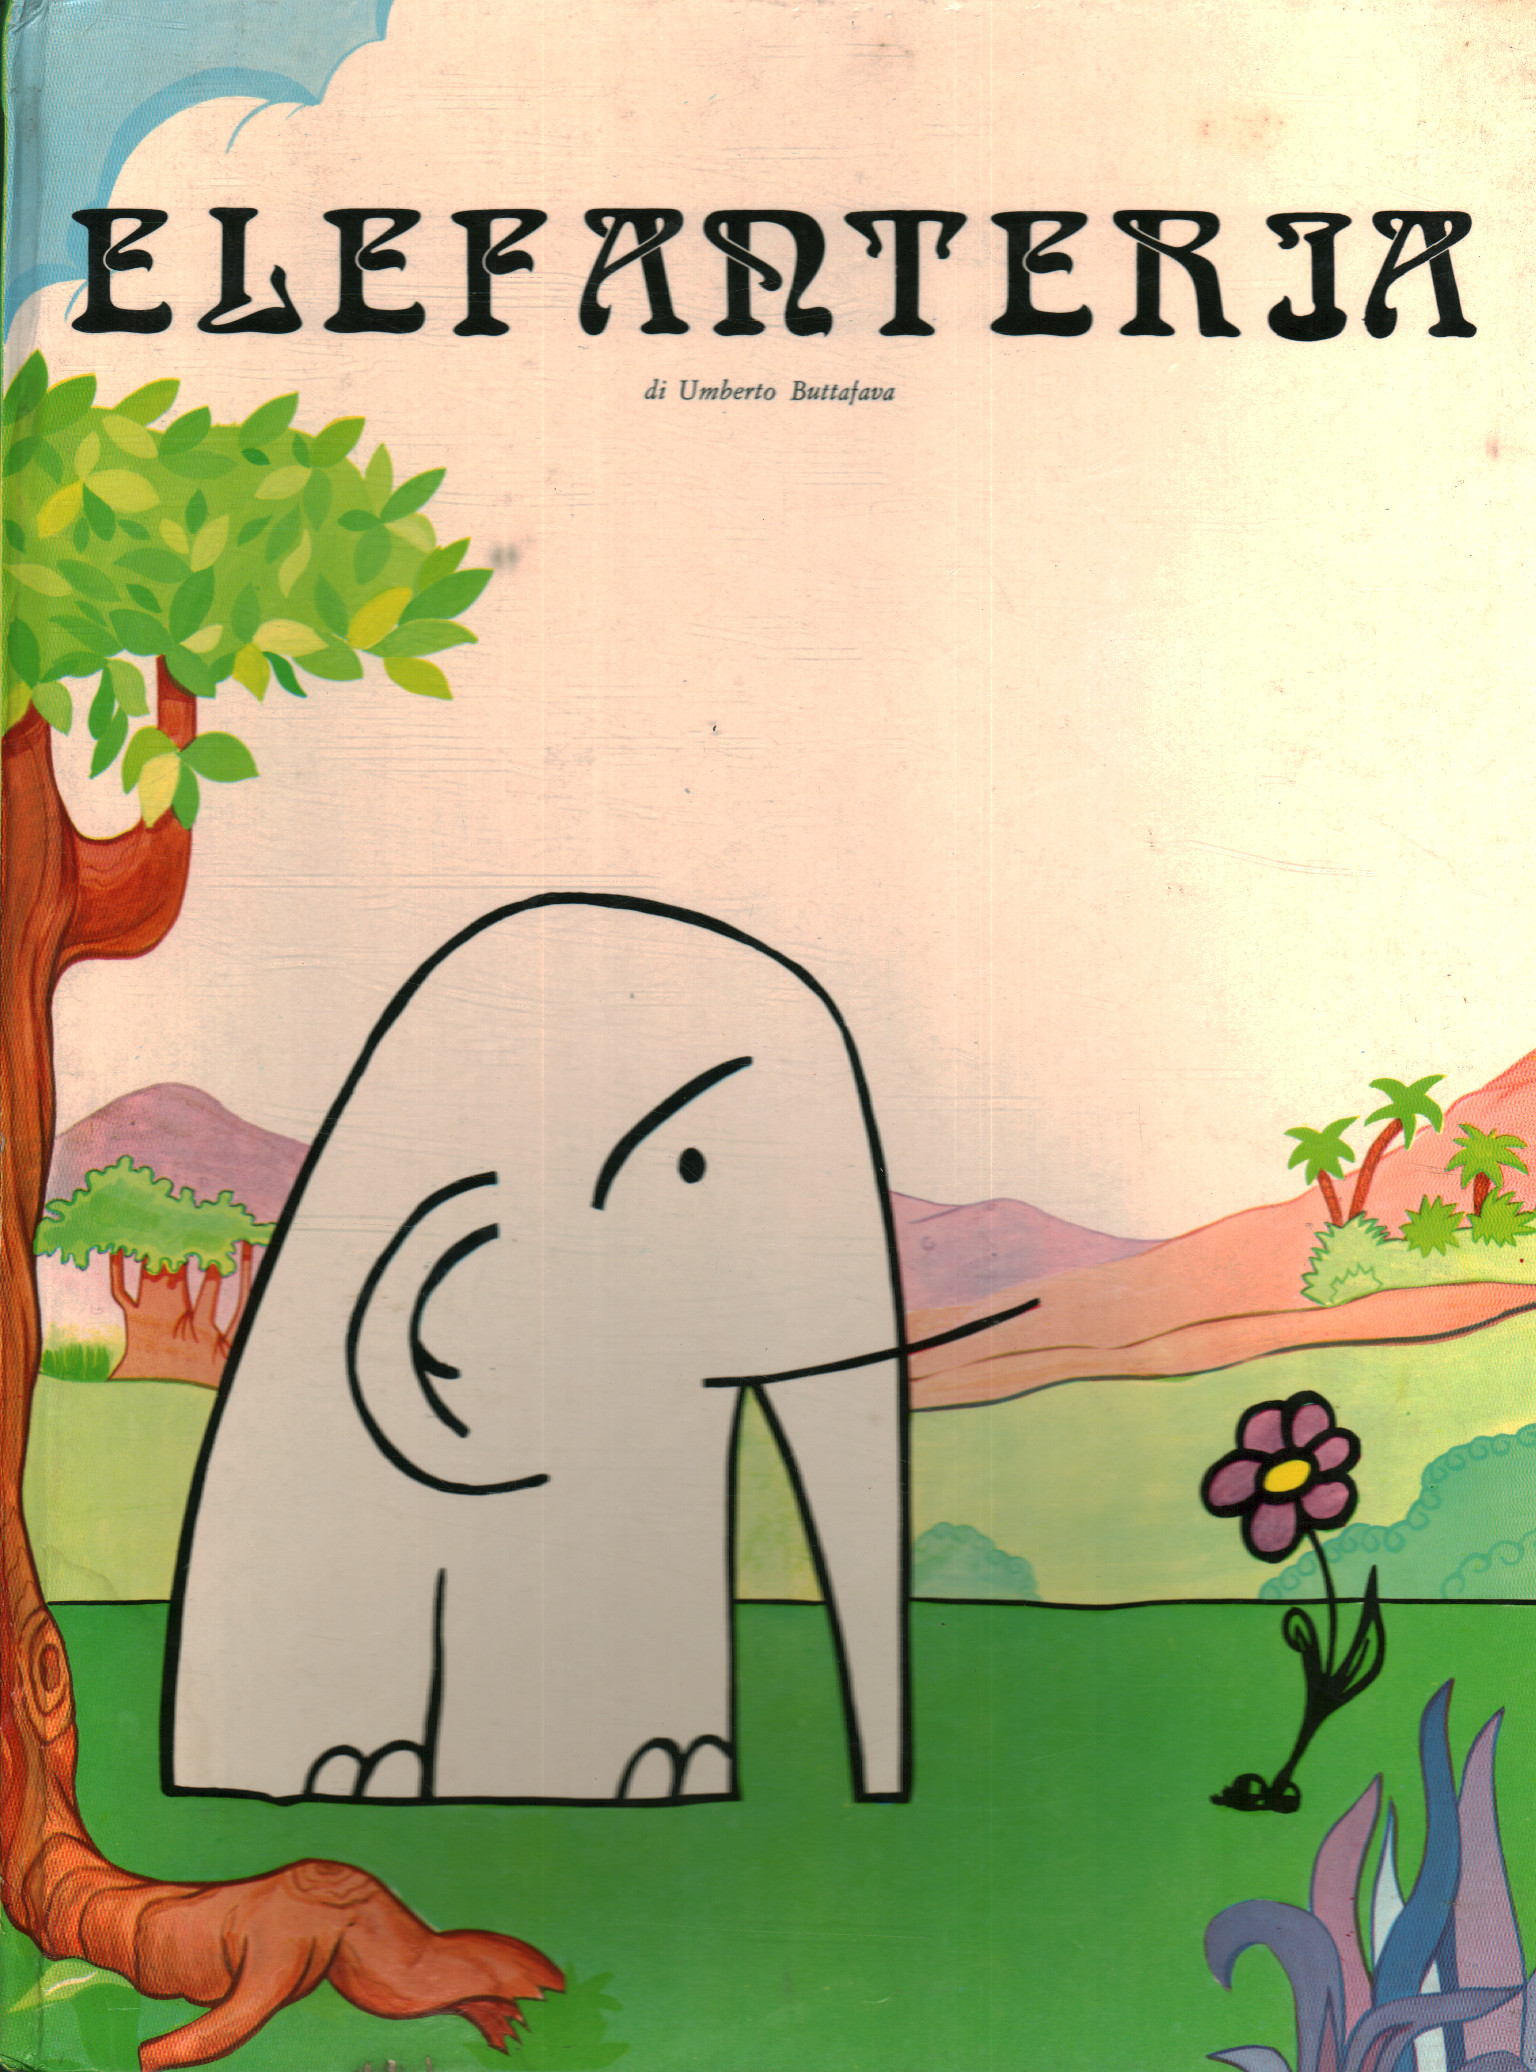 Elephantry, Umberto Buttafava